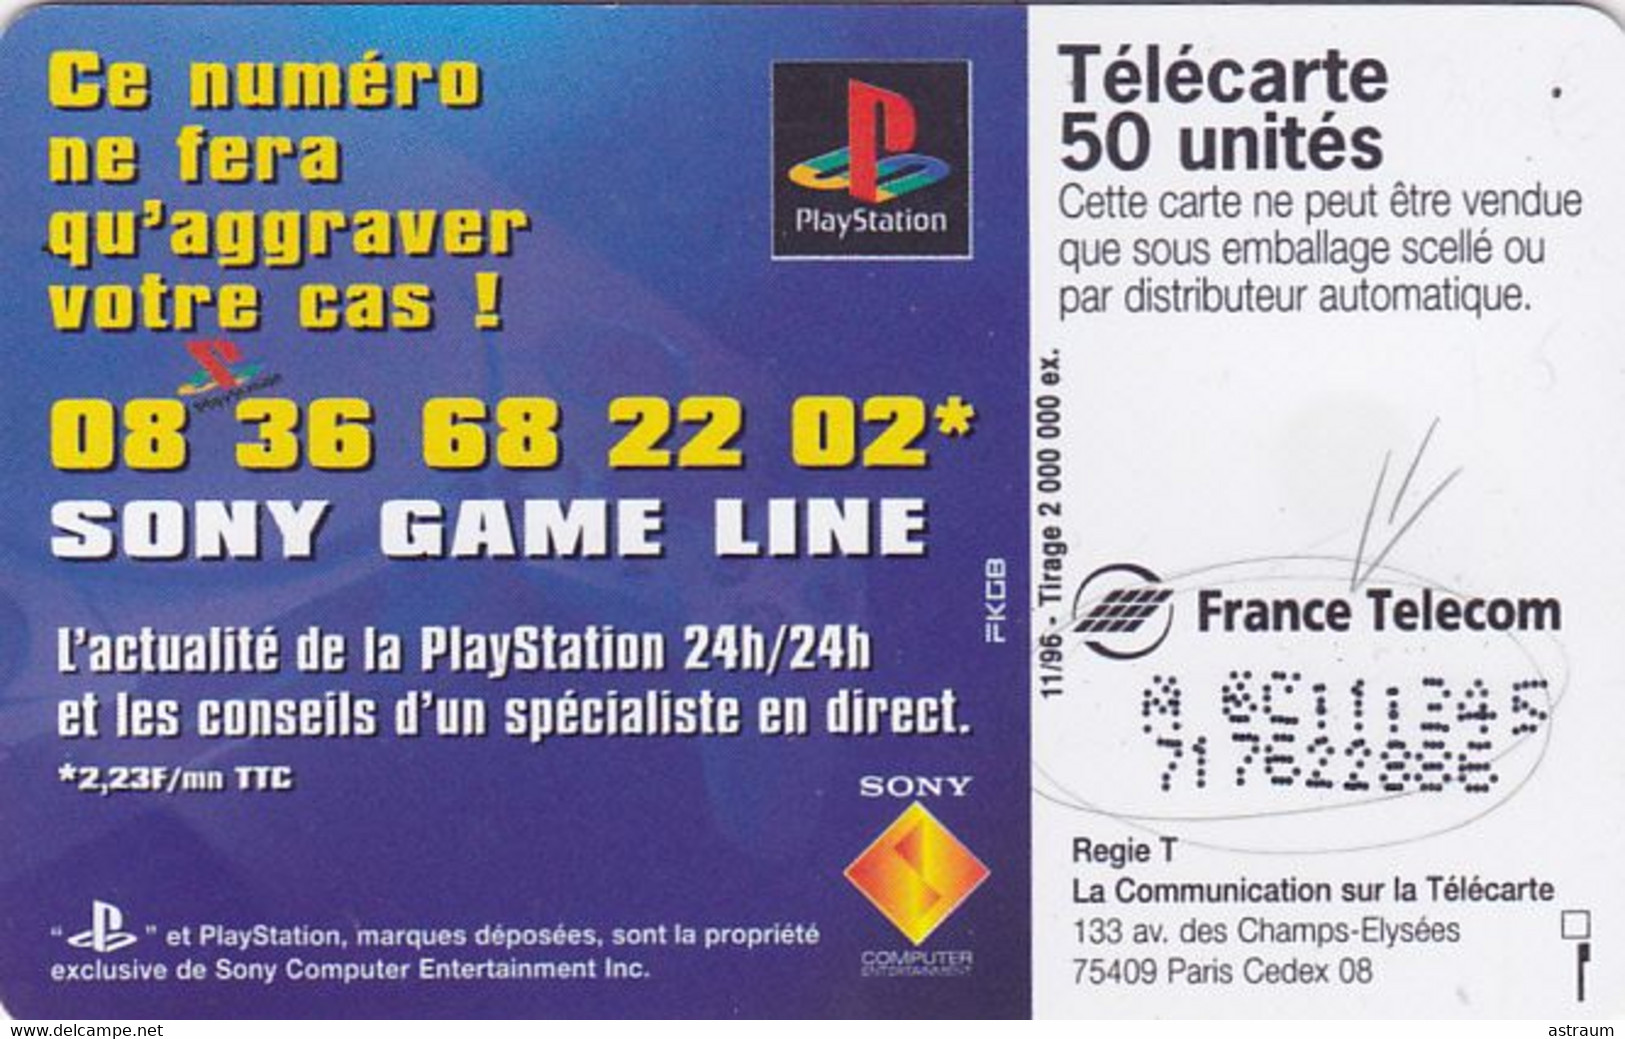 Telecarte Variété - F 705 - Playstation  Accro ? - ( N°ondulé ) - Errors And Oddities